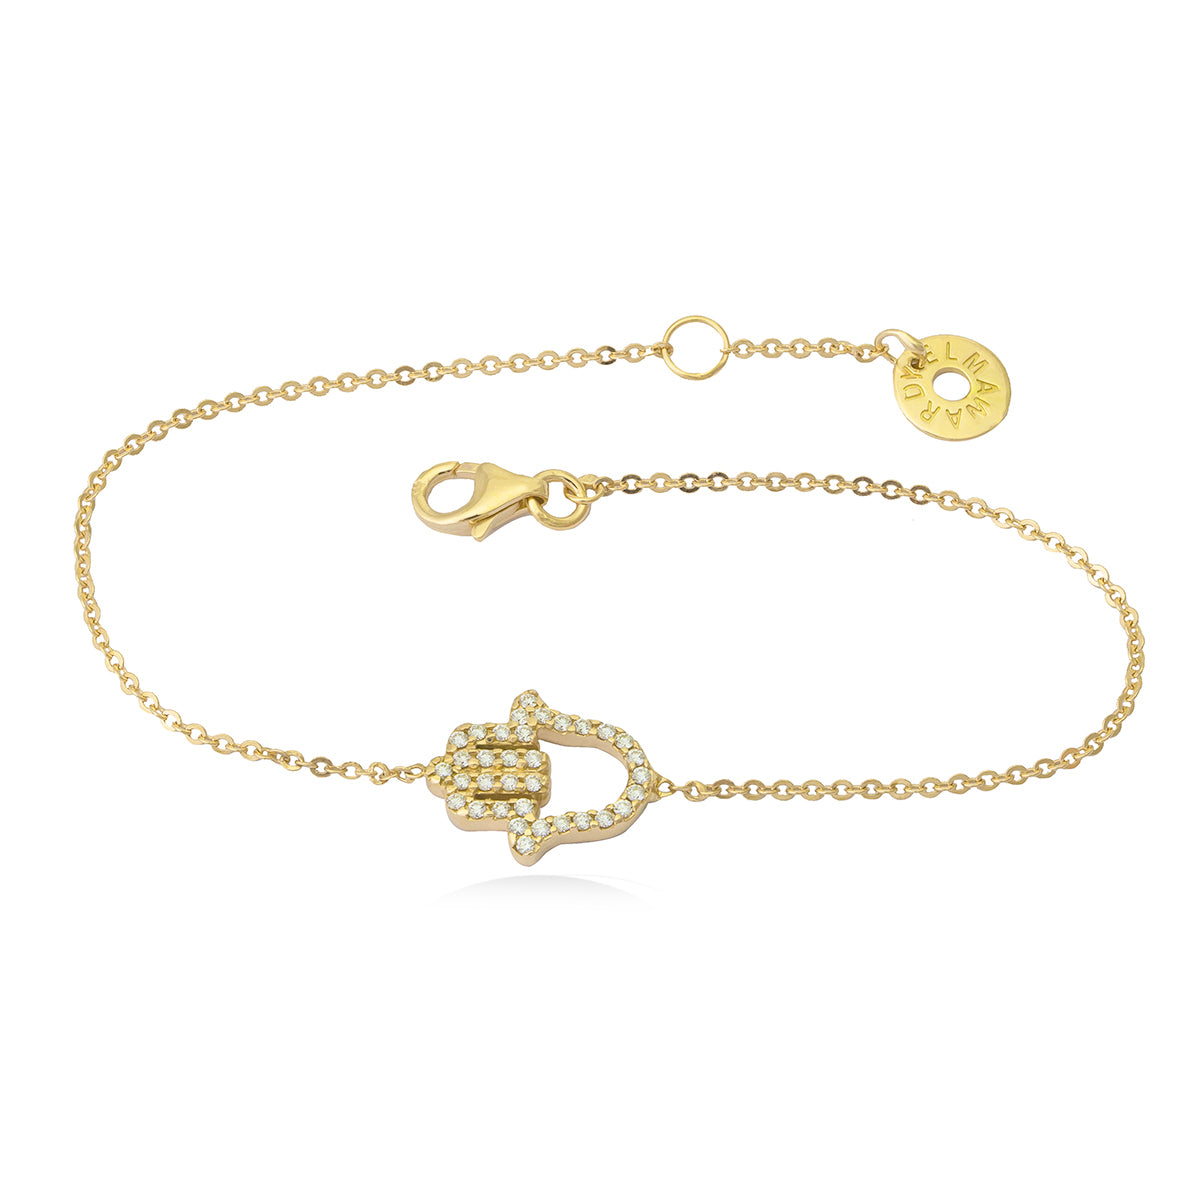 Hamsa Chain Bracelet in 18K Yellow Gold